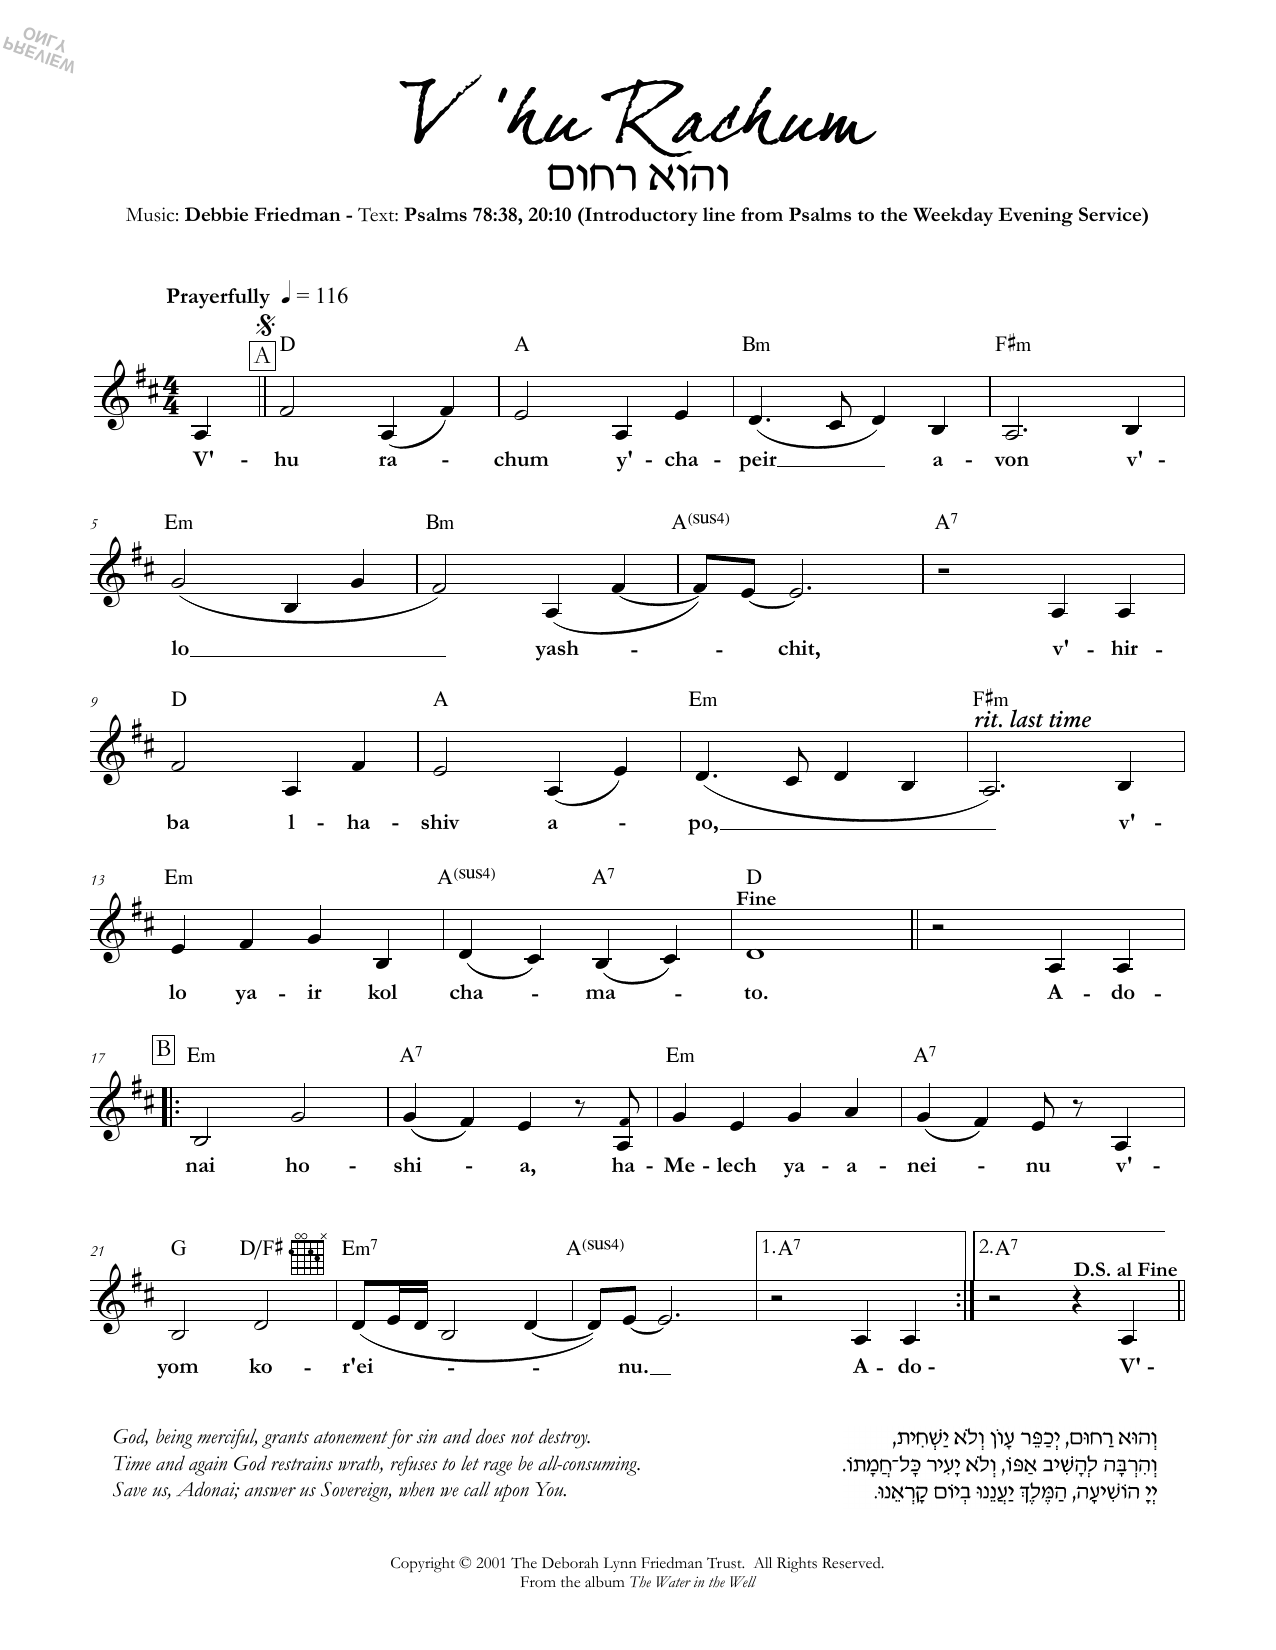 Download Debbie Friedman V'hu Rachum Sheet Music and learn how to play Lead Sheet / Fake Book PDF digital score in minutes